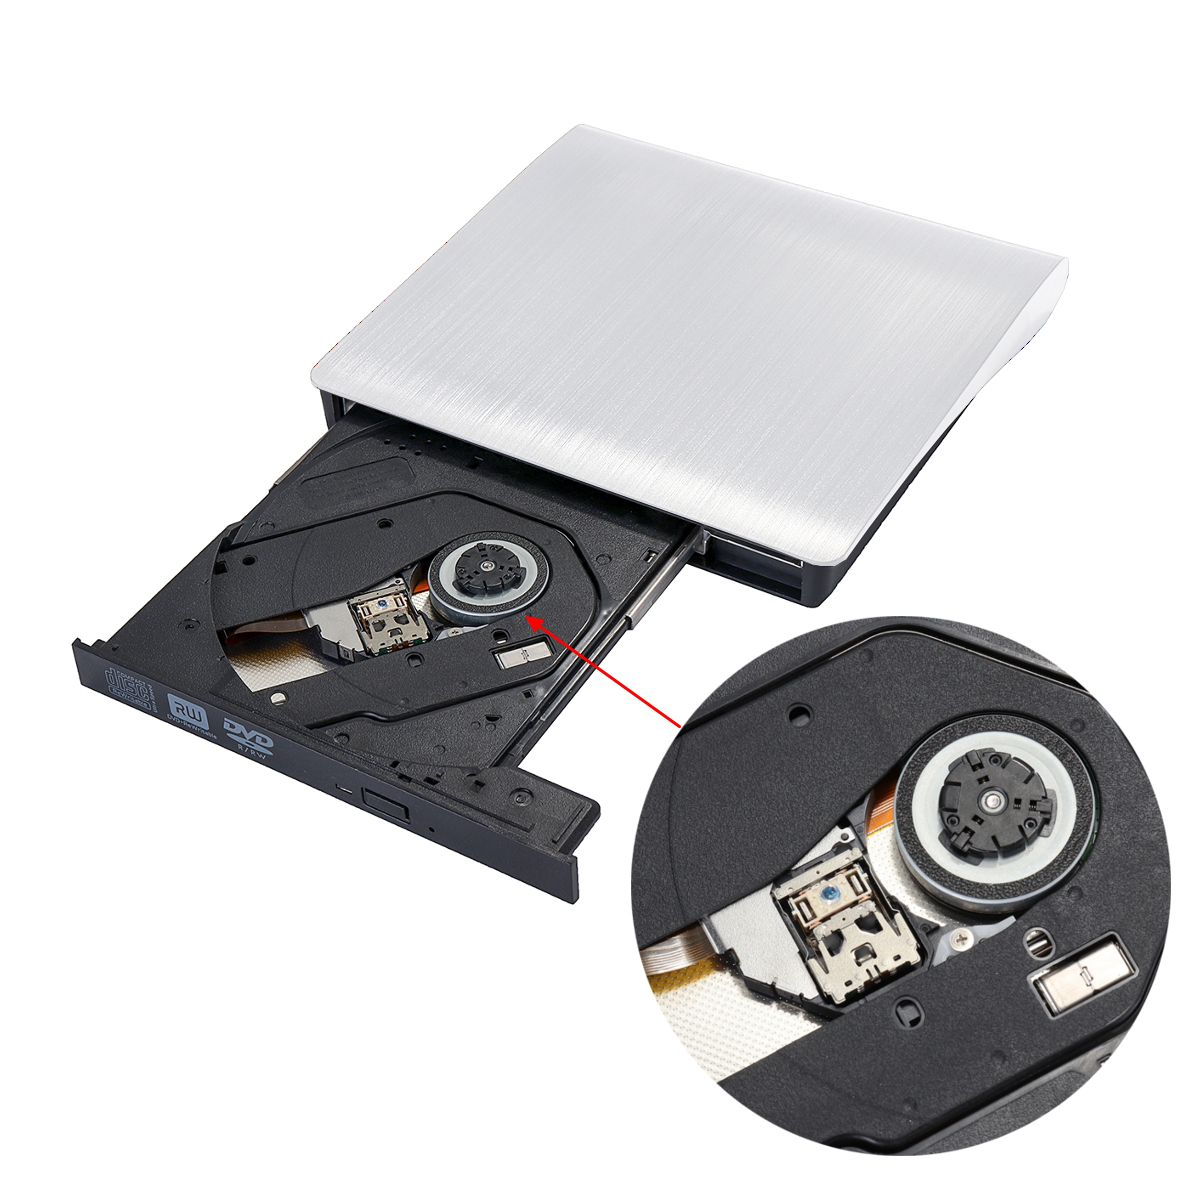 USB 3.0 Slim External DVD Optical Drive DVD-RW CD-RW Combo Drive Burner Reader Player 25